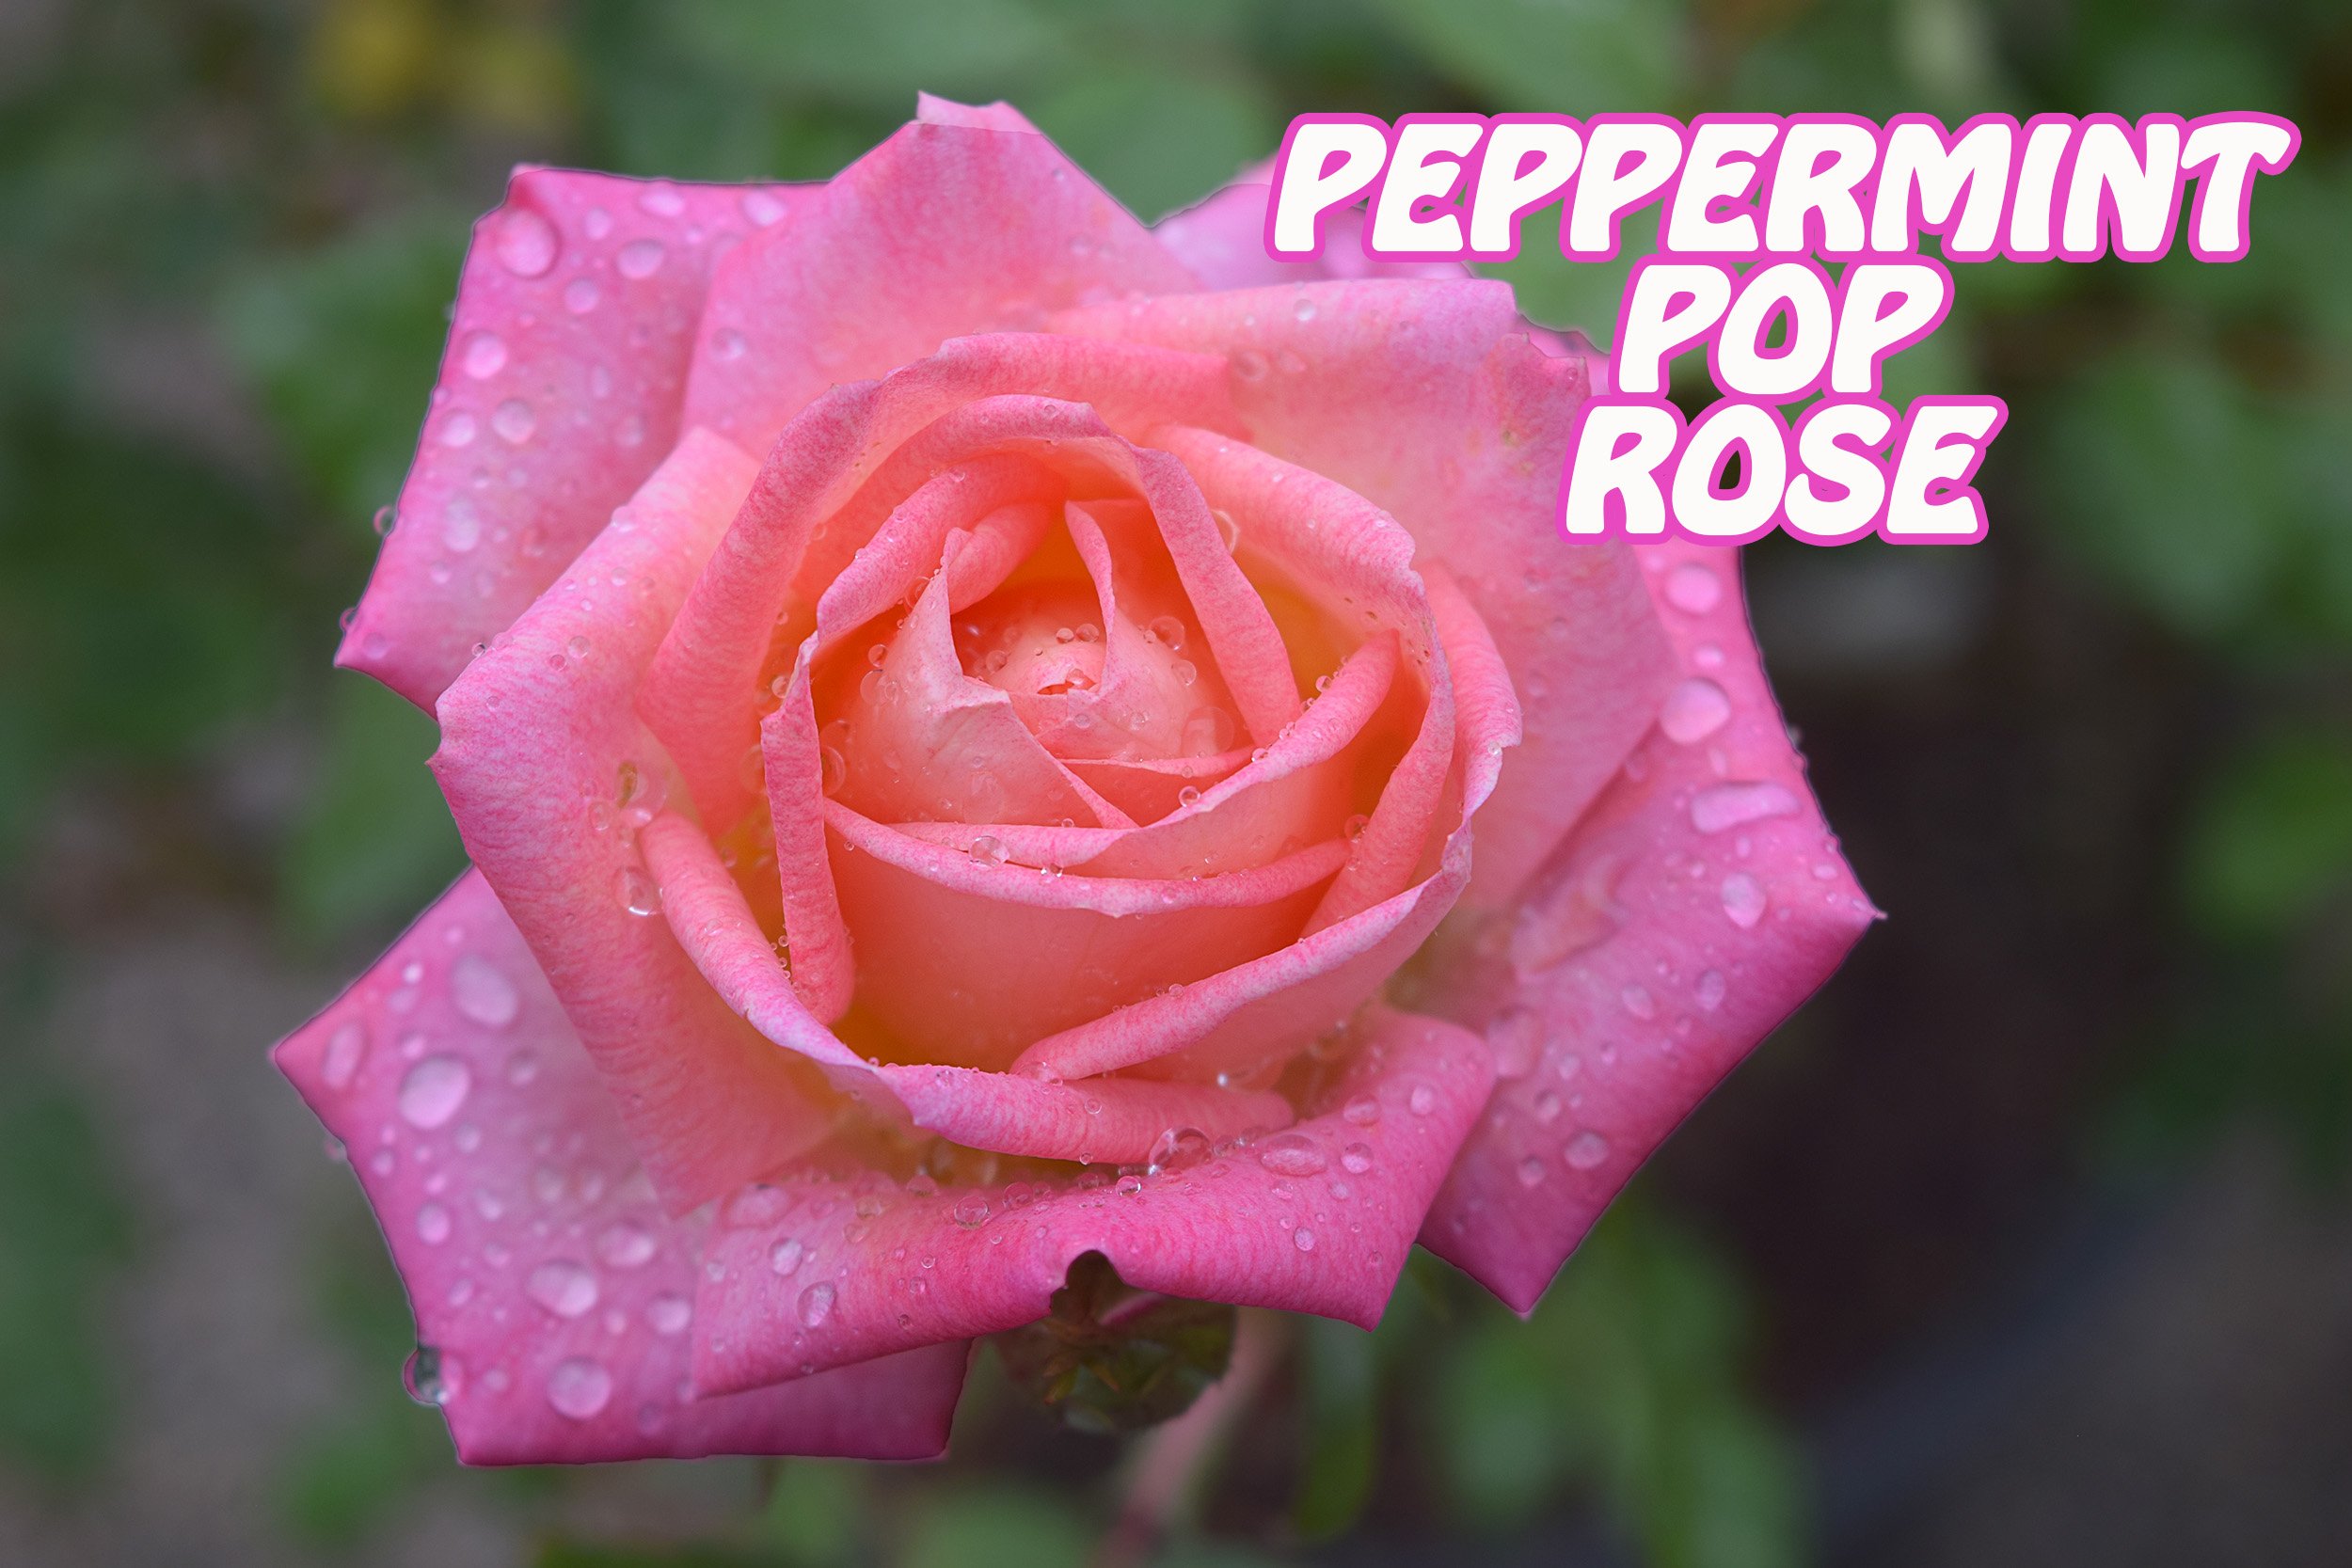 peppermint pop rose.jpg